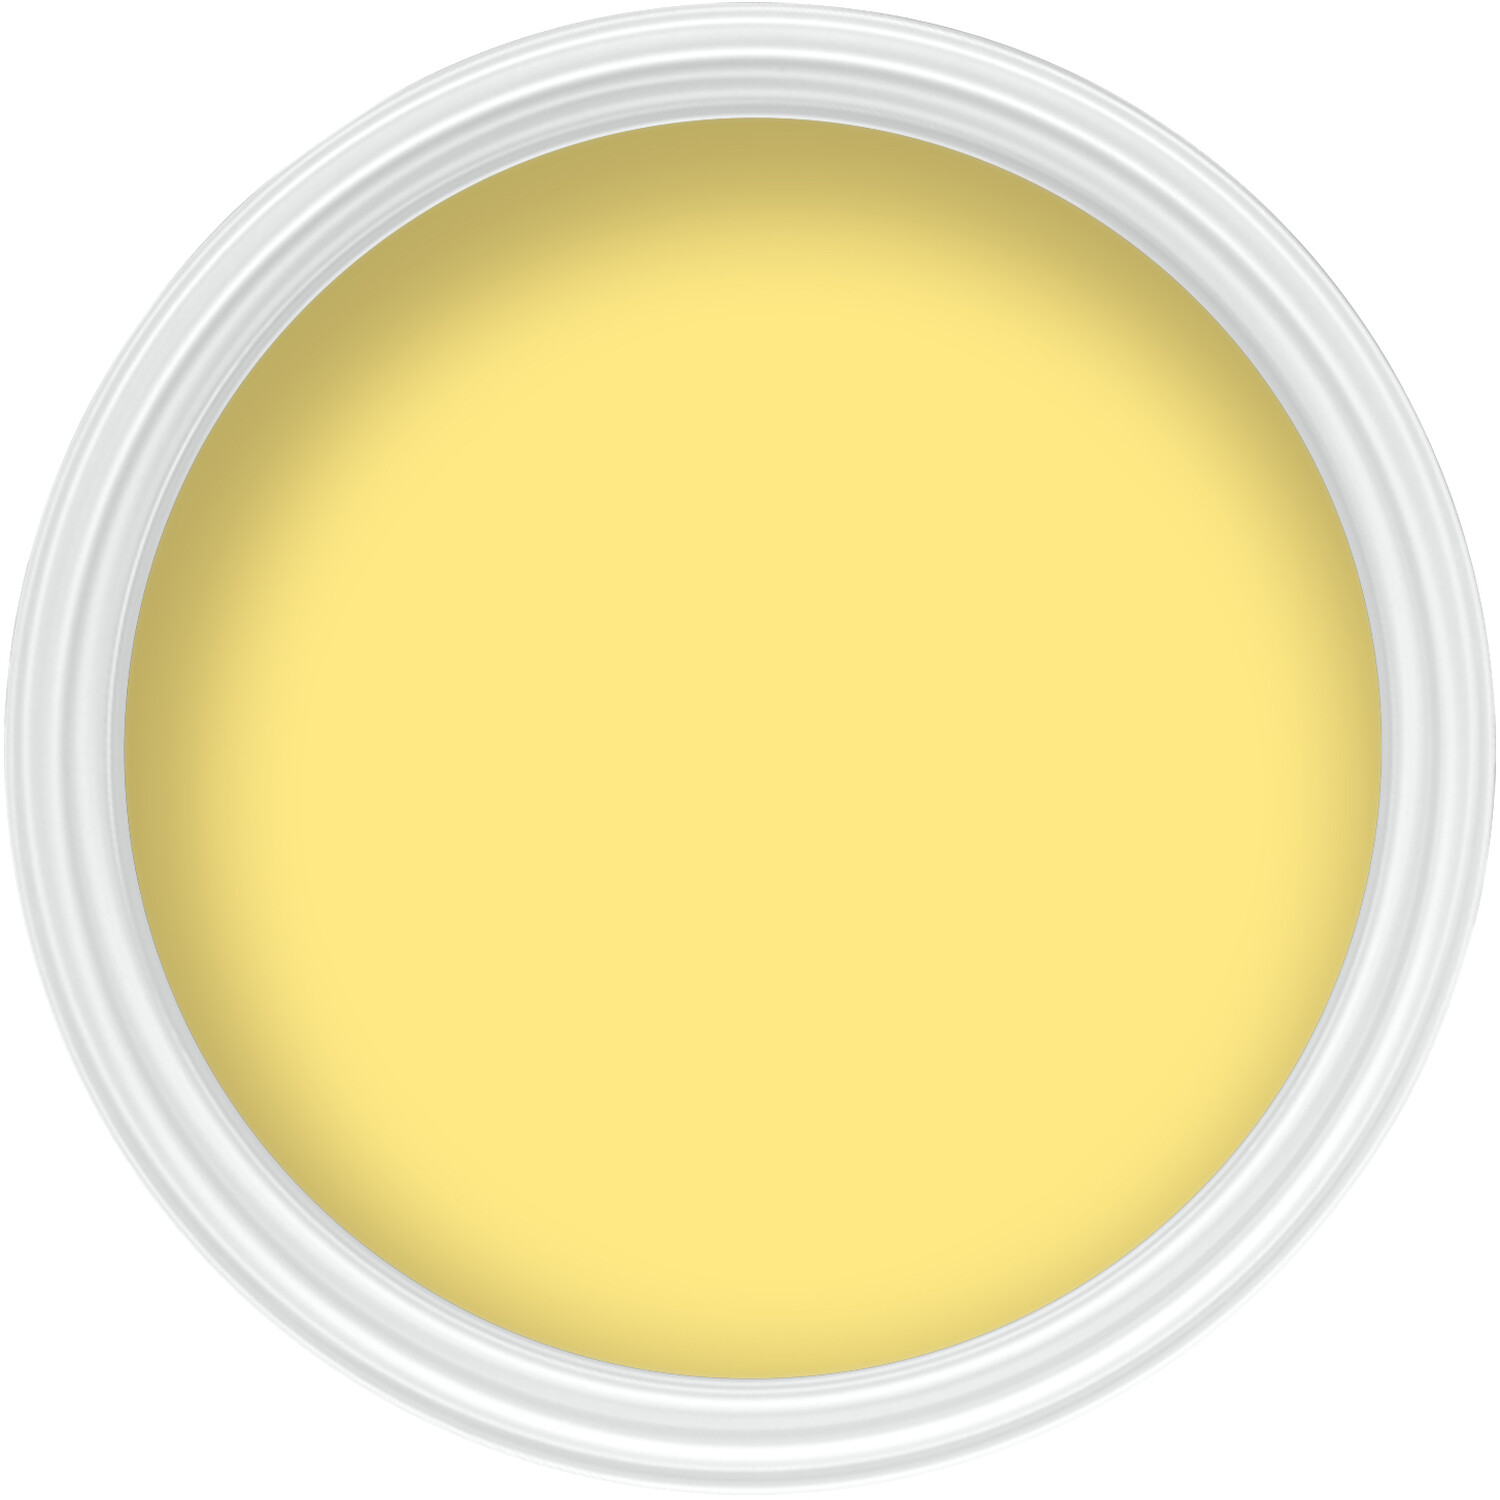 Berger Walls & Ceilings Lemon Glow Matt Emulsion Paint 2.5L Image 3